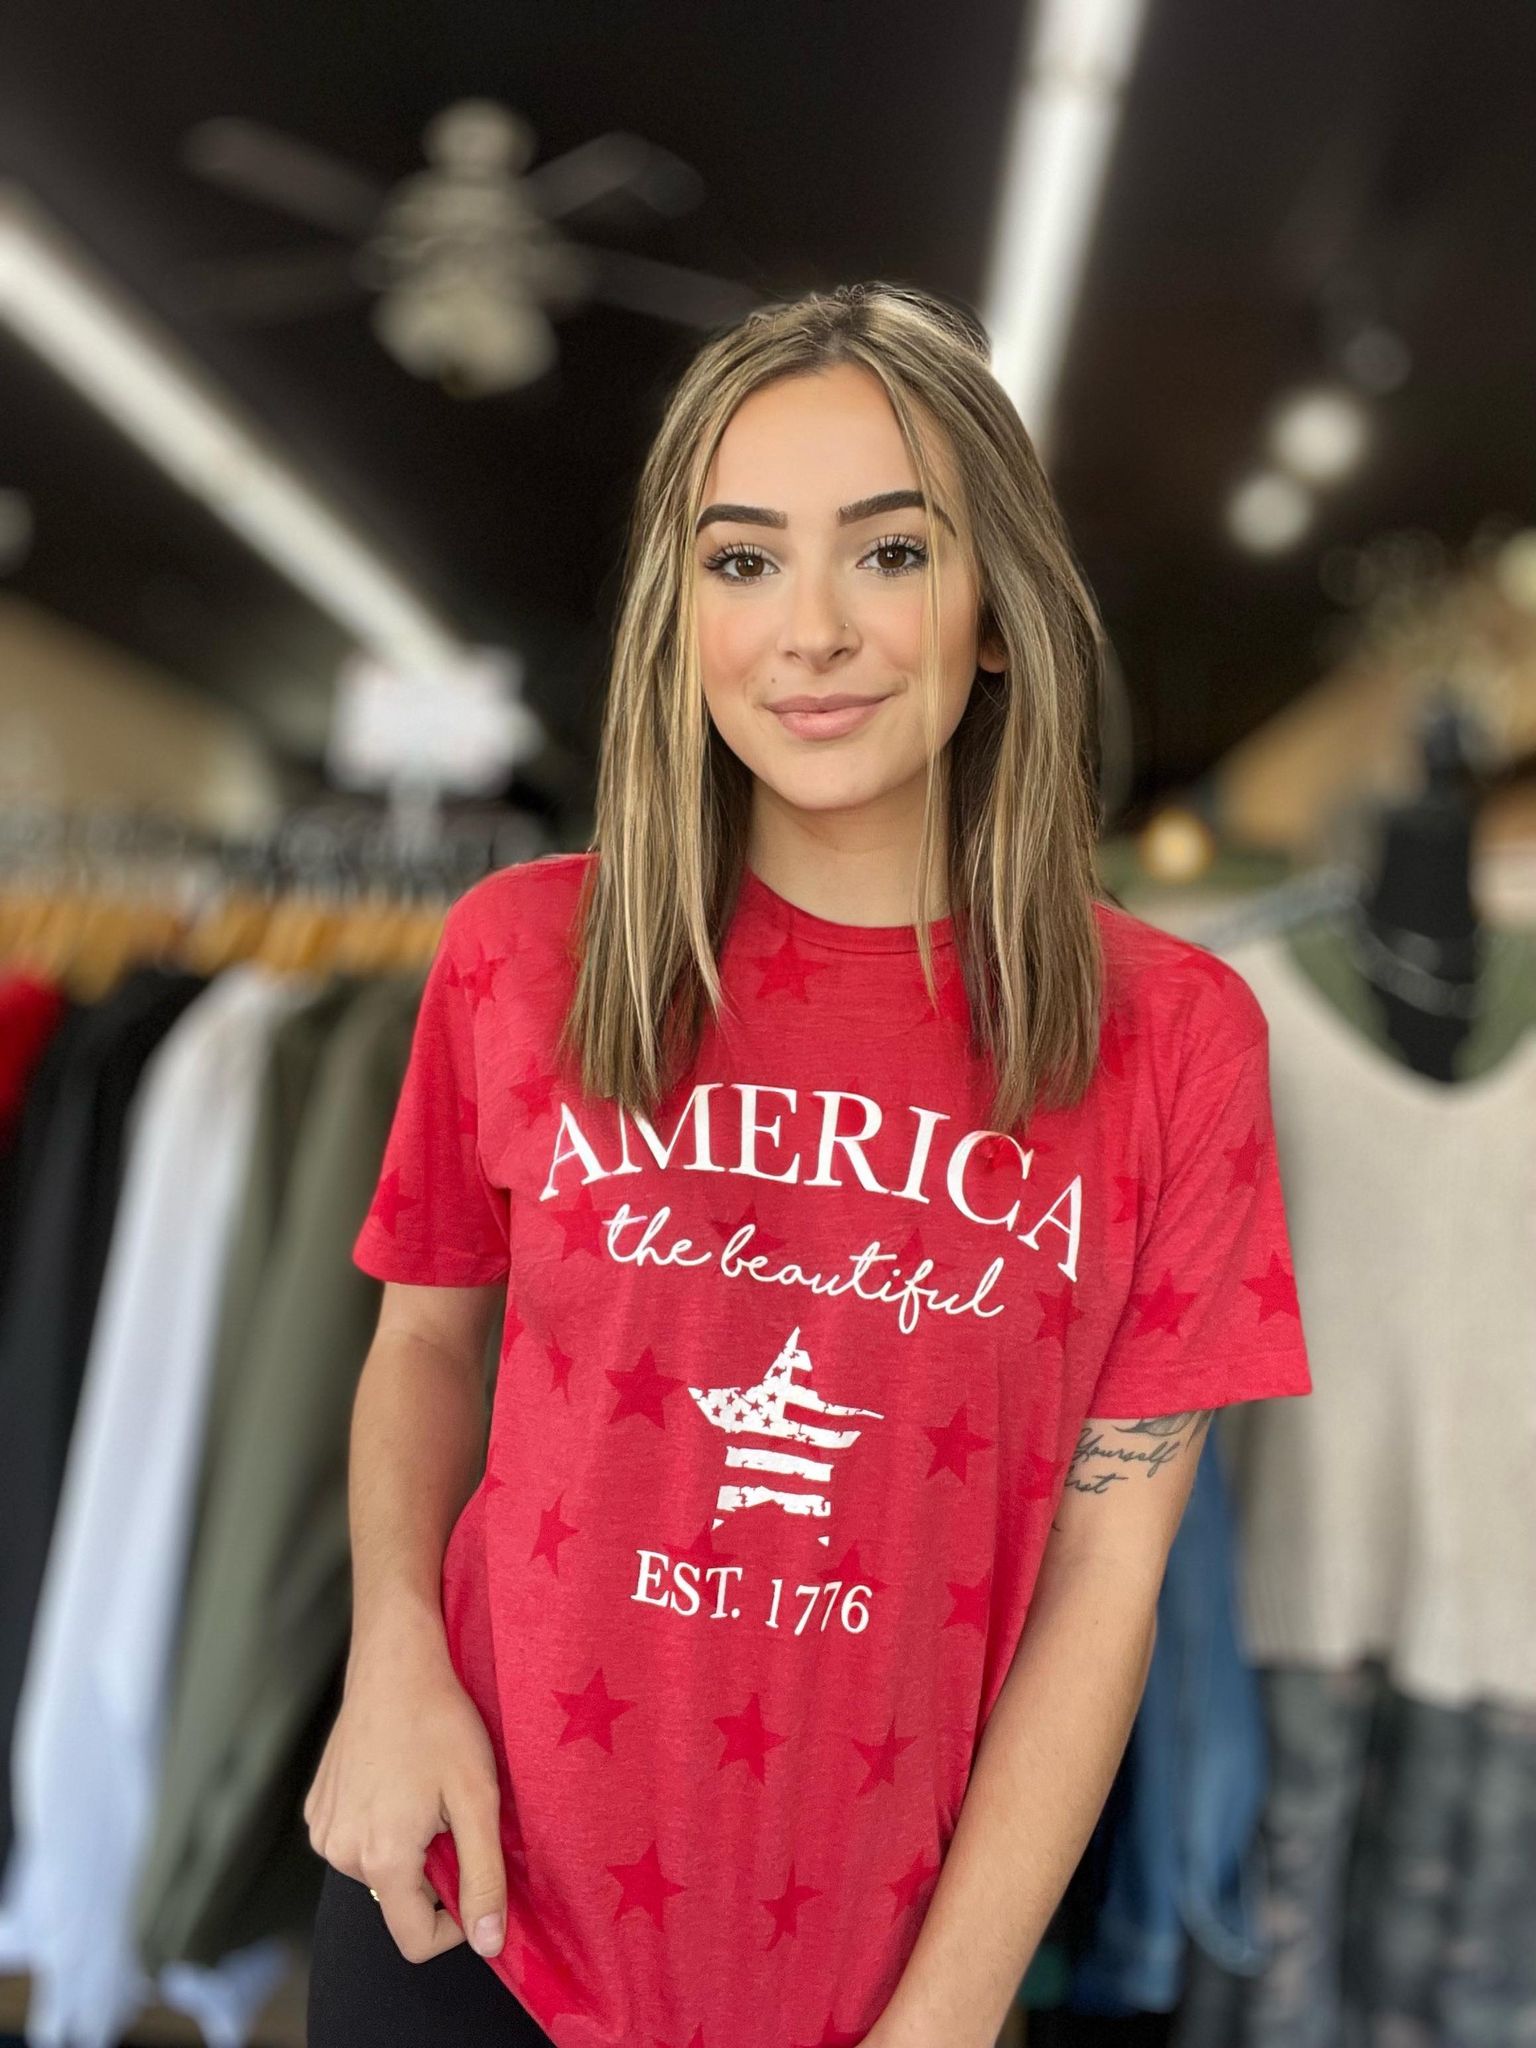 America The Beautiful Star Tee-ask apparel wholesale